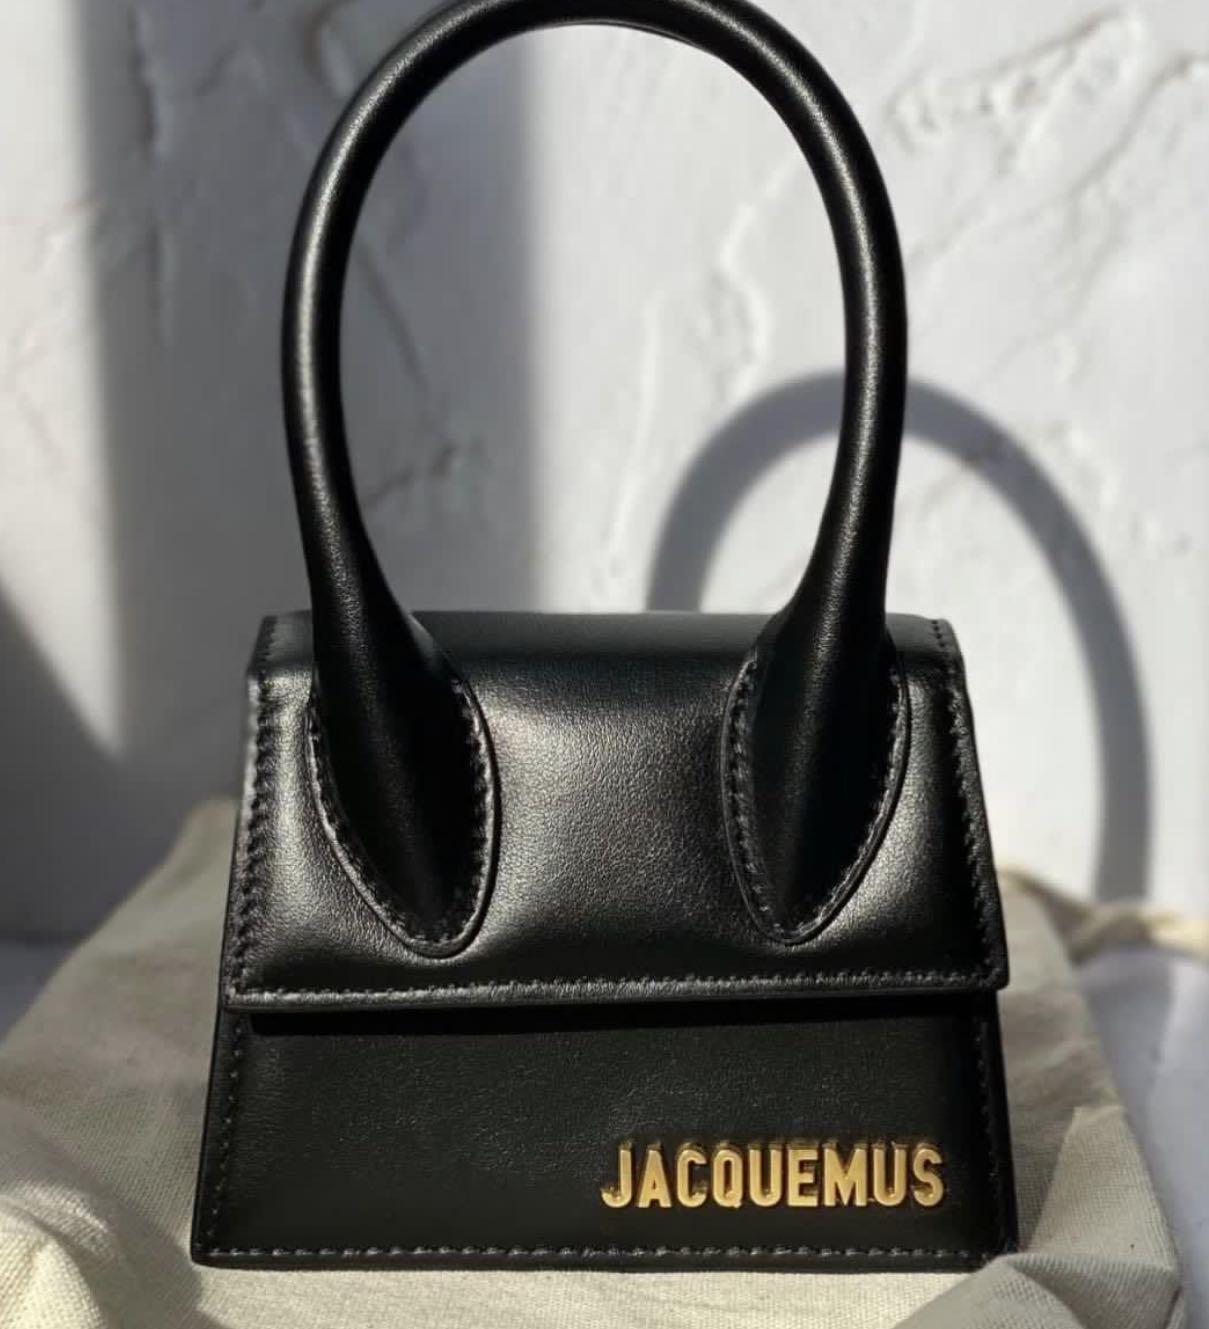 Heart Evangelista's Miniature Jacquemus Bag | Preview.ph